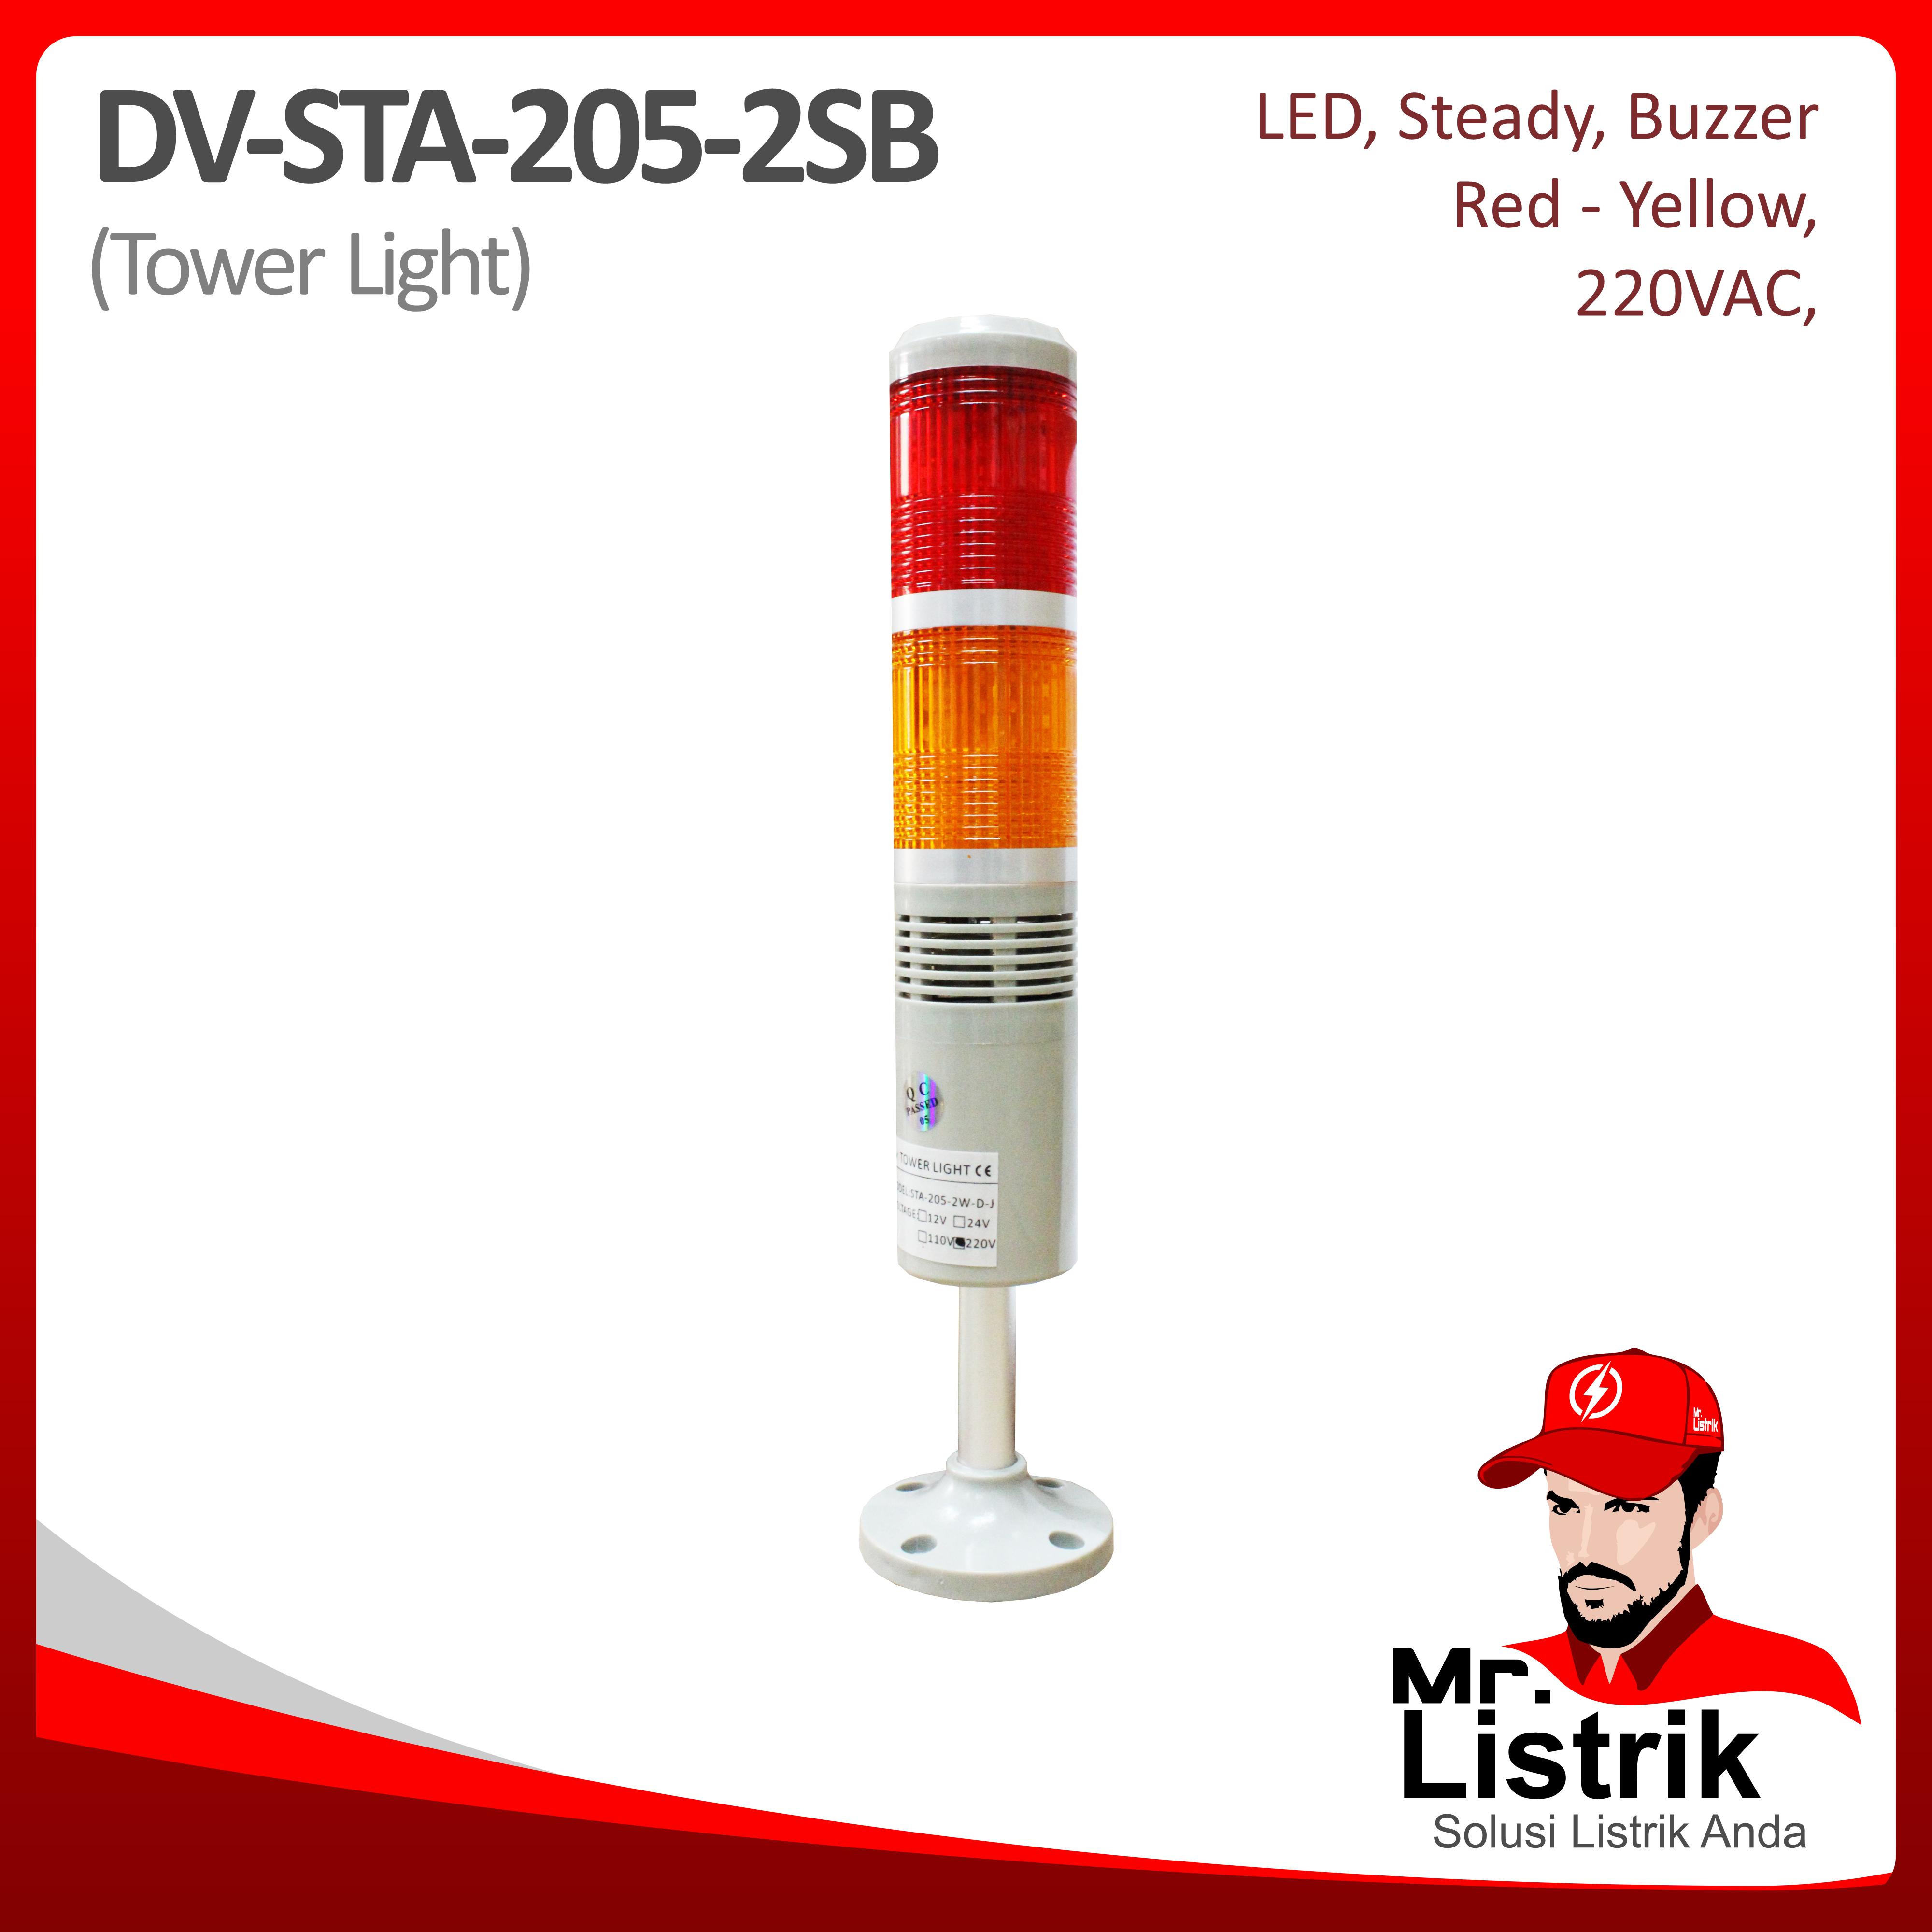 Tower Light LED Steady Buzzer Red+Yellow DV STA-205-2SB